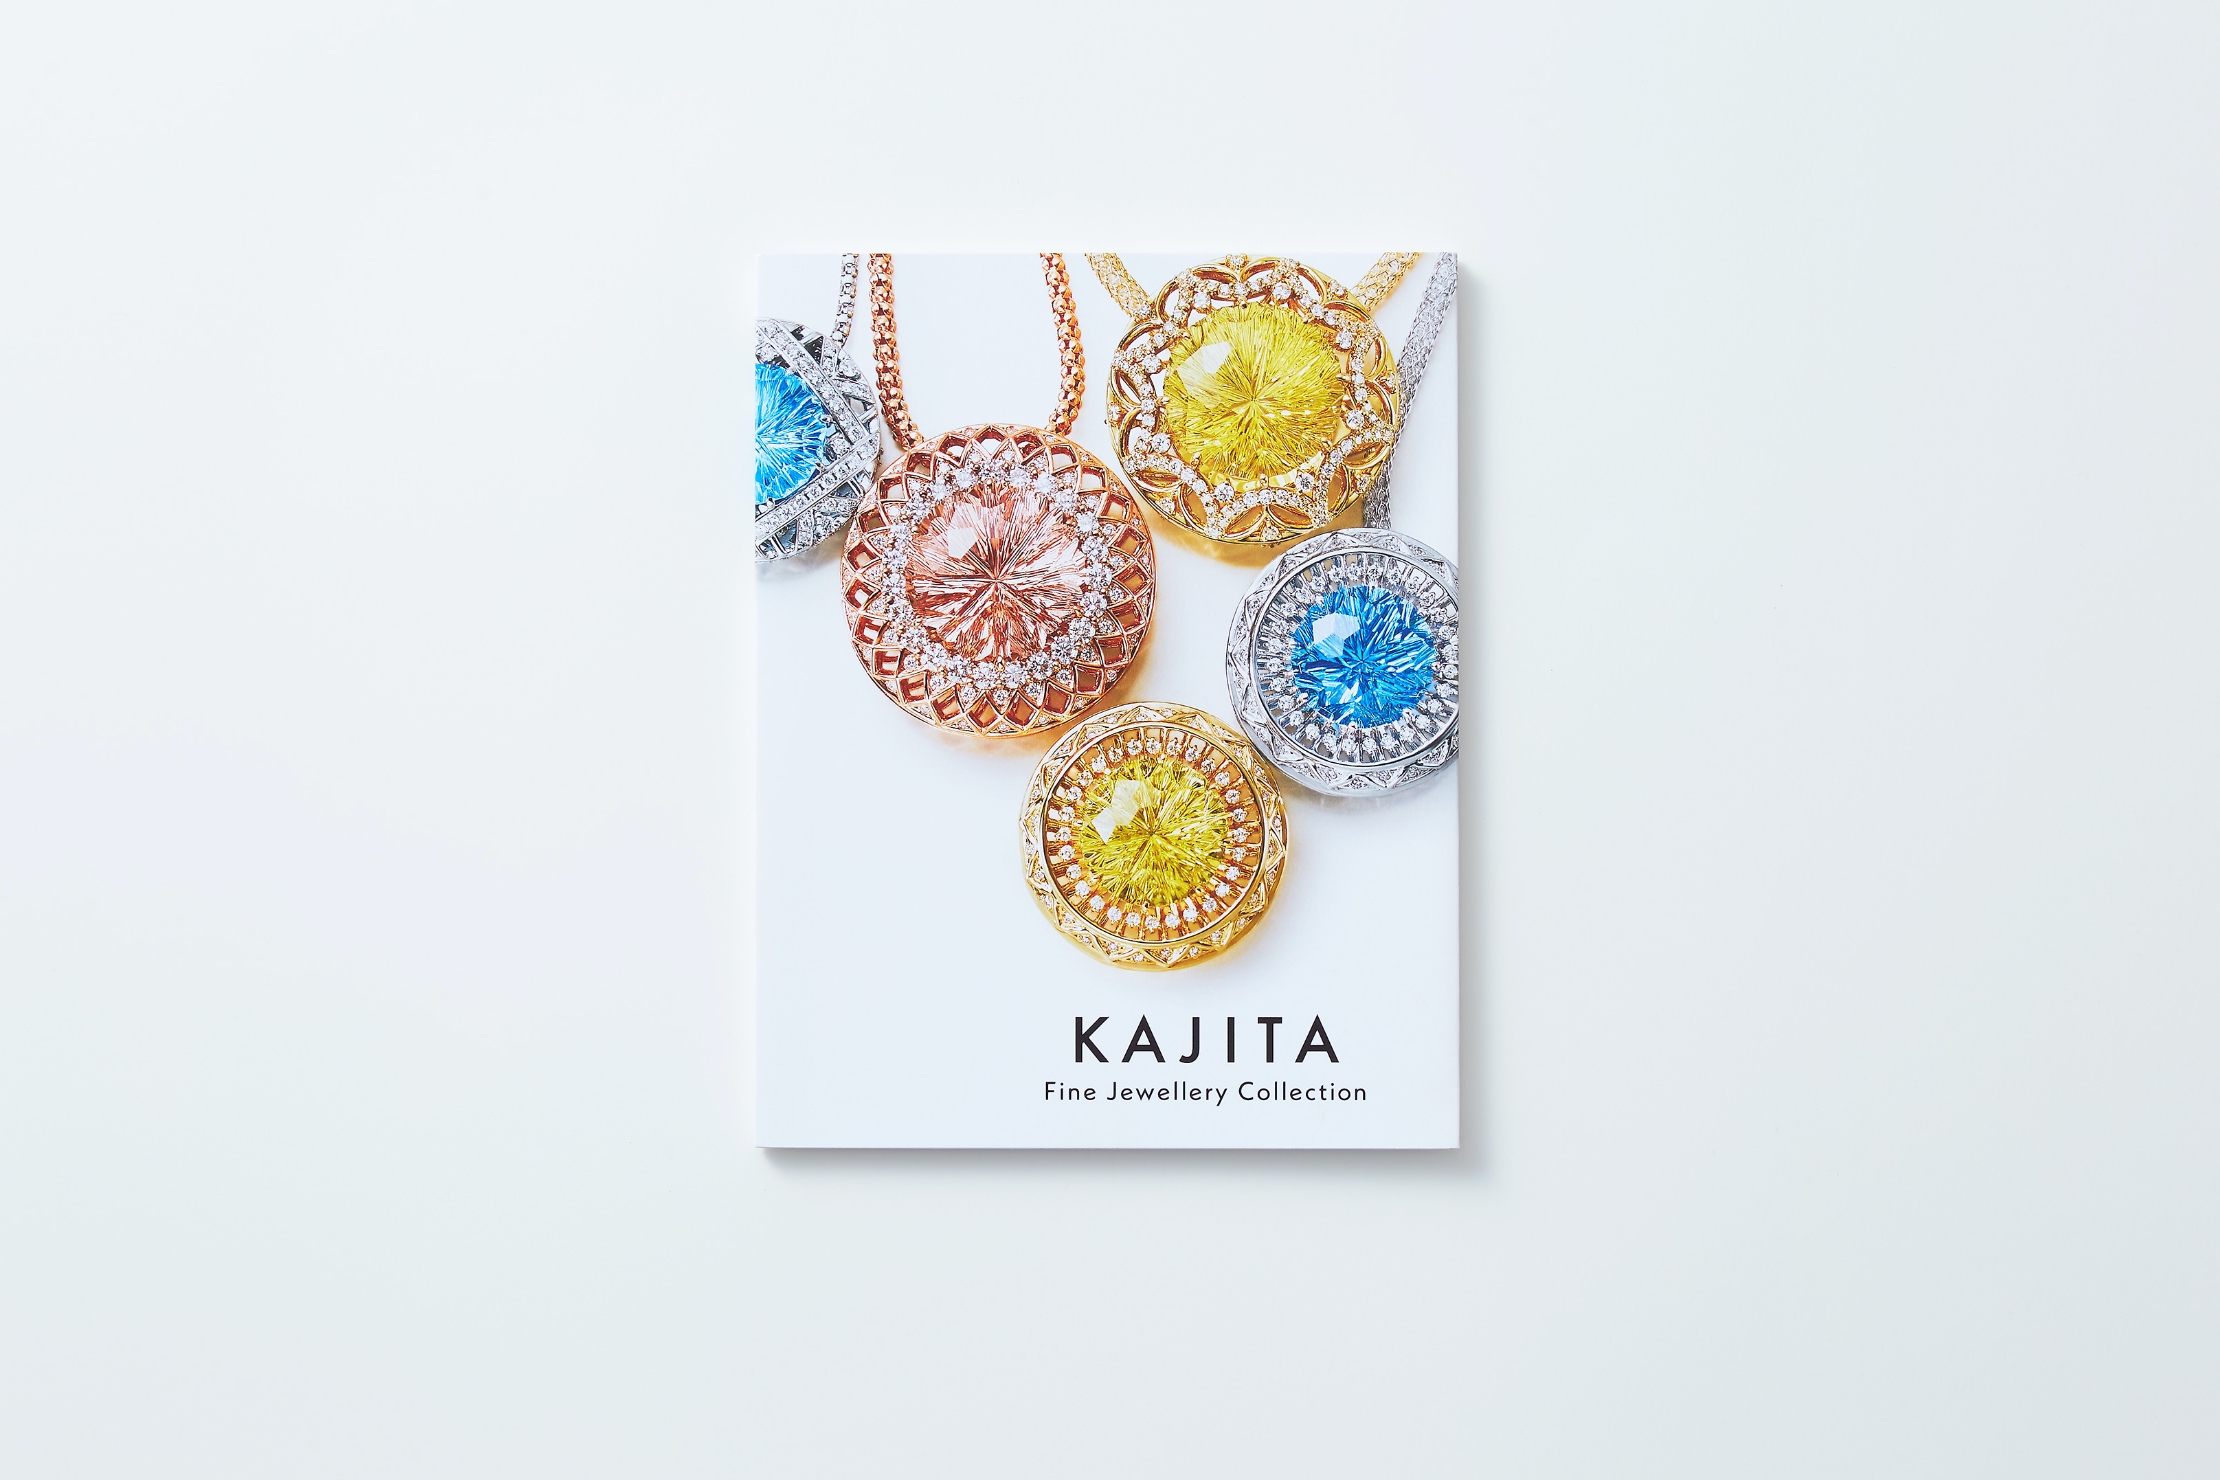 KAJITA Fine Jewellery Collection